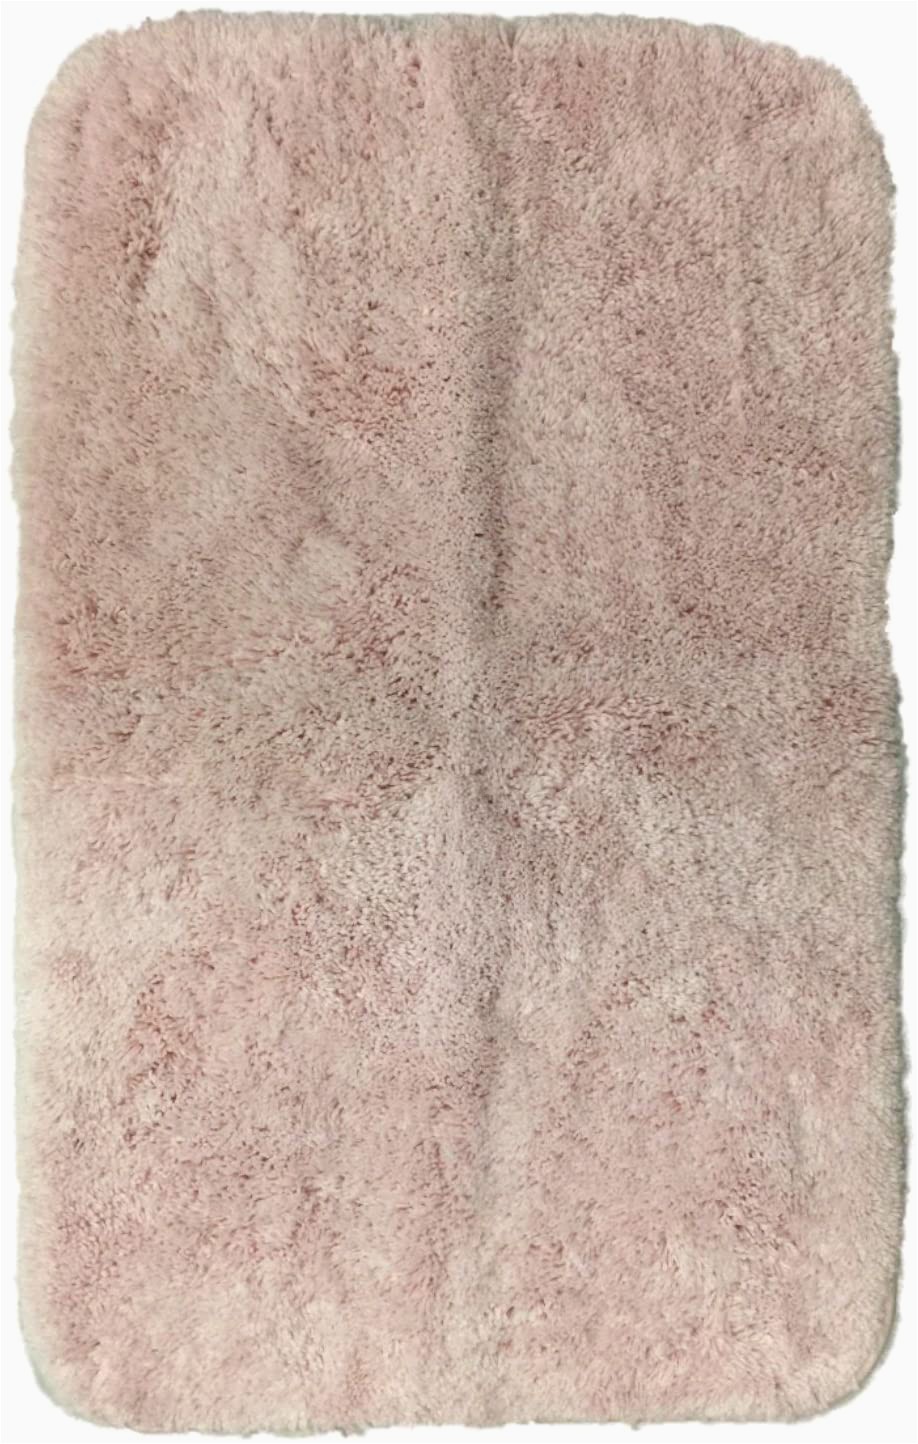 Kohls Bathroom Rugs Sets Amazon sonoma Ultimate Light Blush Pink Skid Resistant